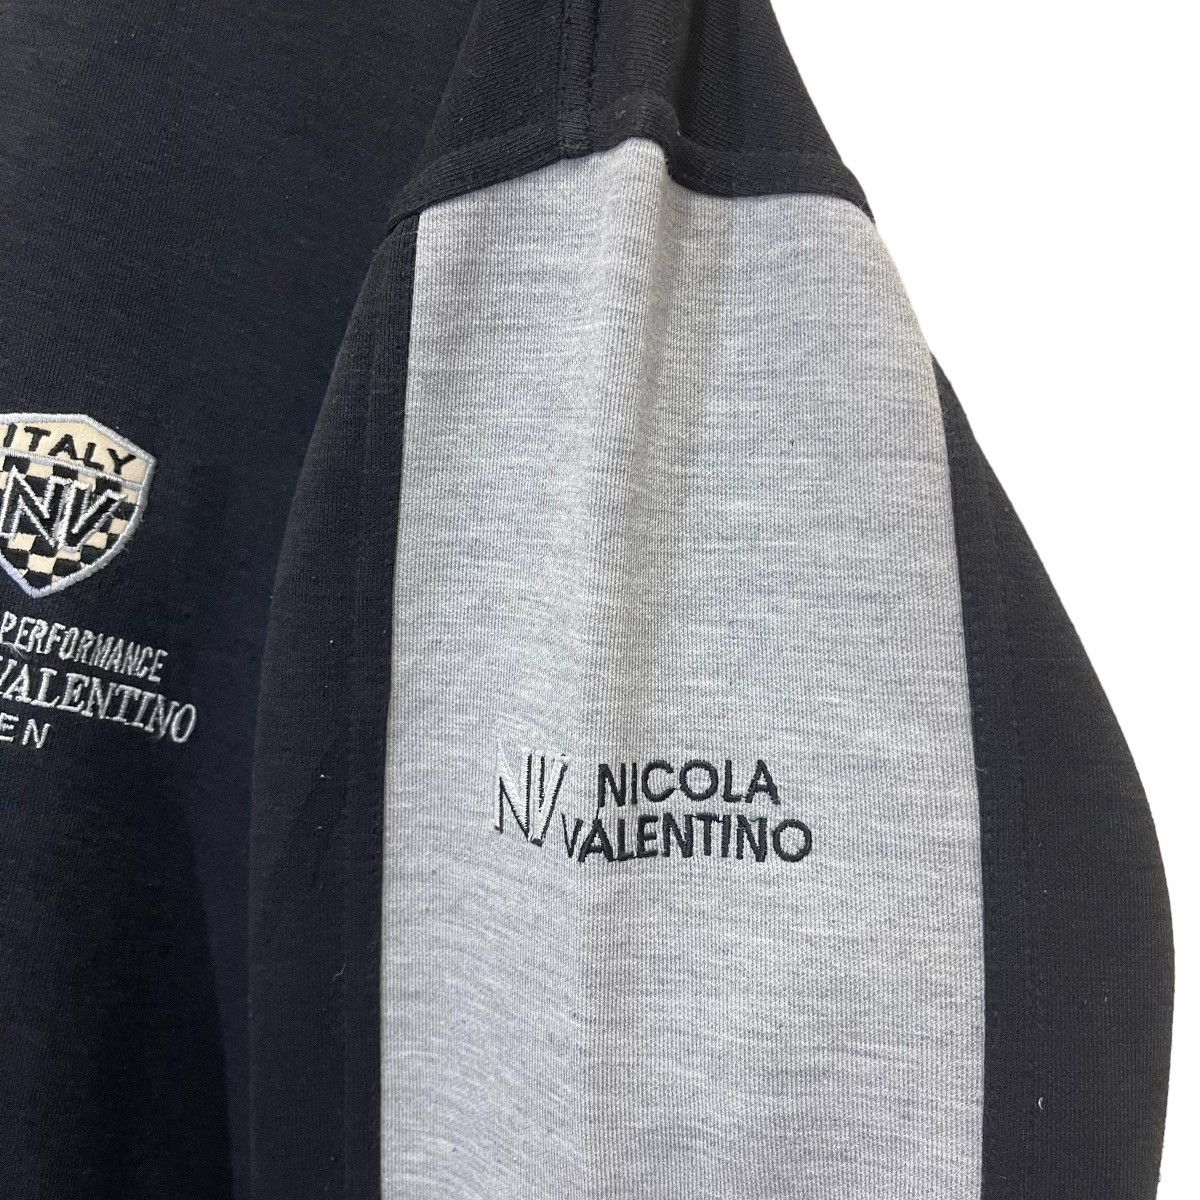 Vintage Nicola Valentino Crewneck Sweatshirt Size M - 7